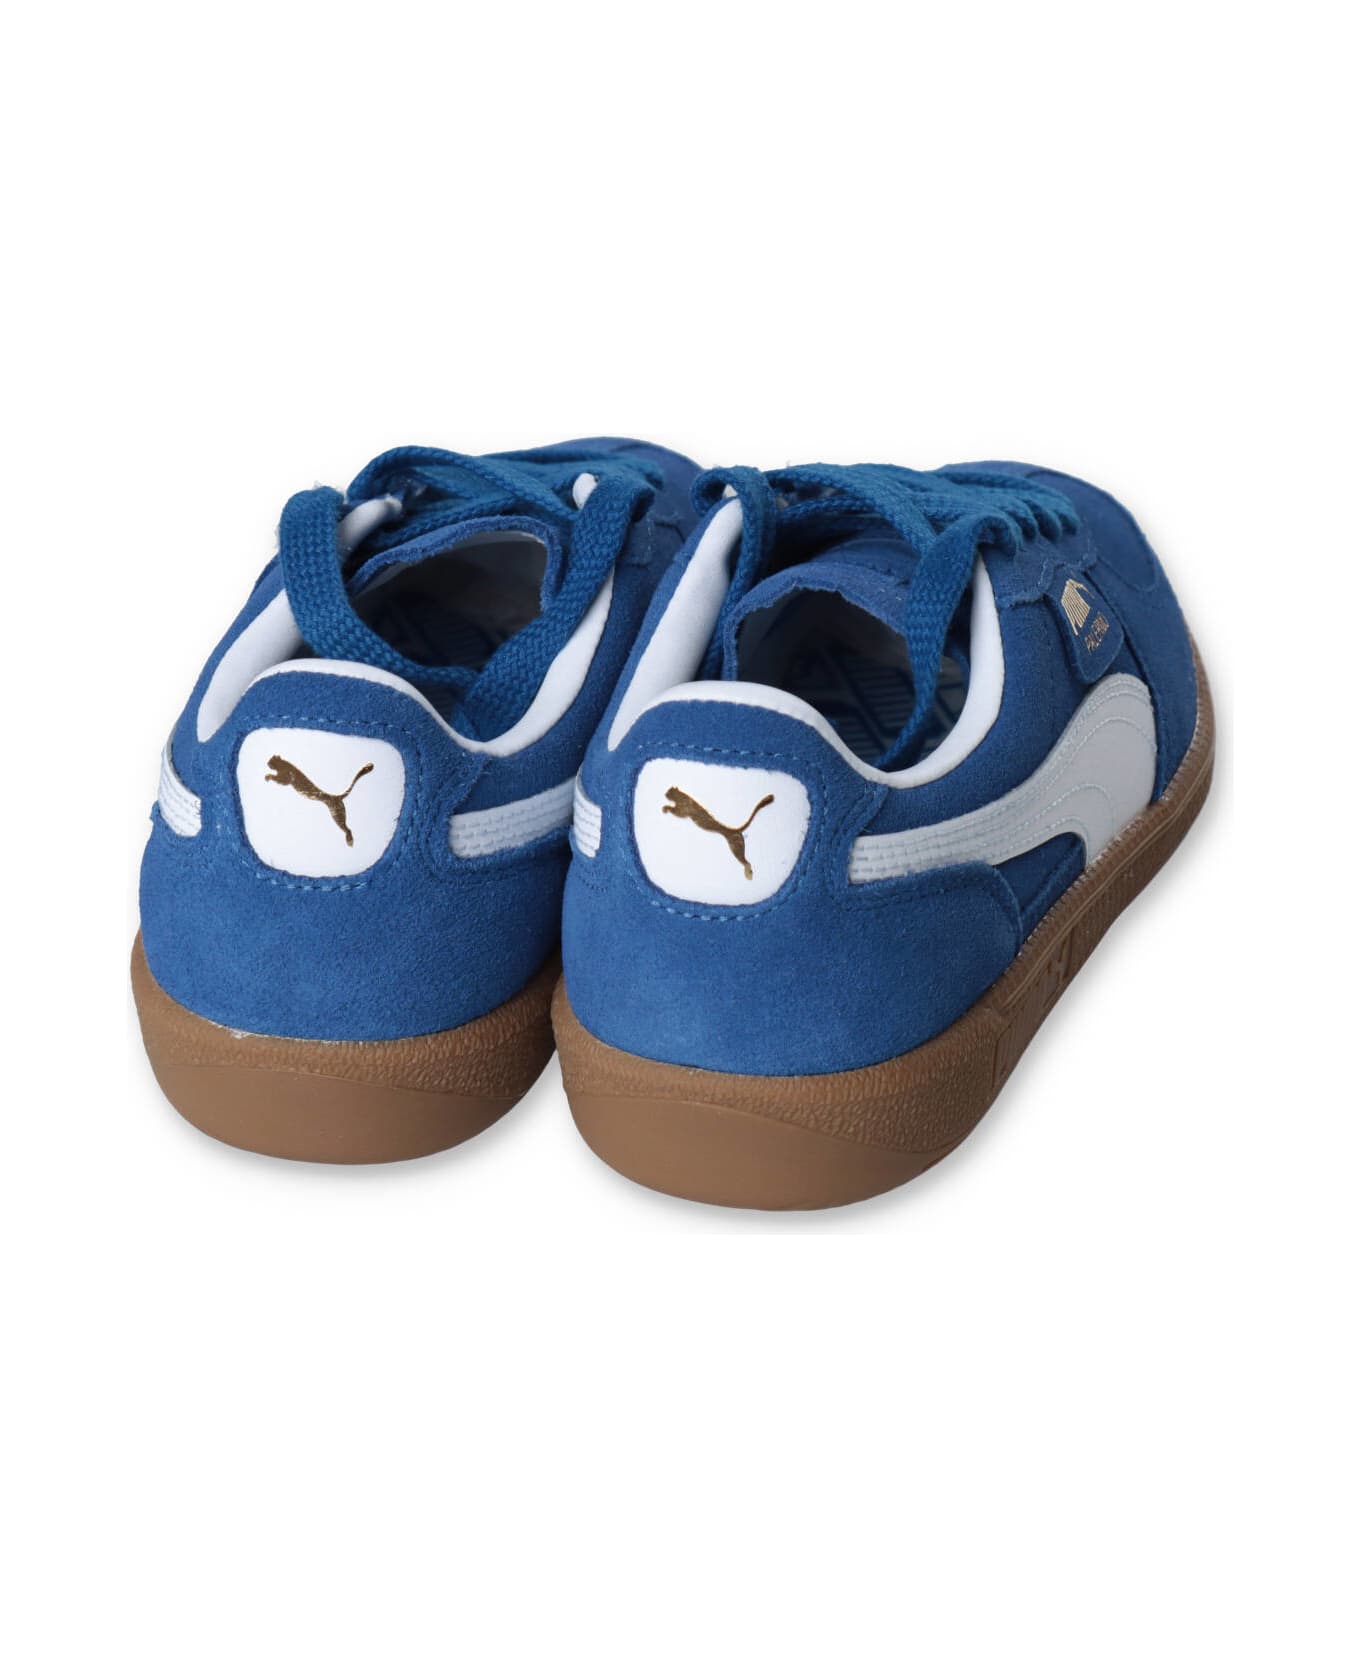 Puma Sneakers Blu Royal In Pelle Scamosciata Bambino - Blu